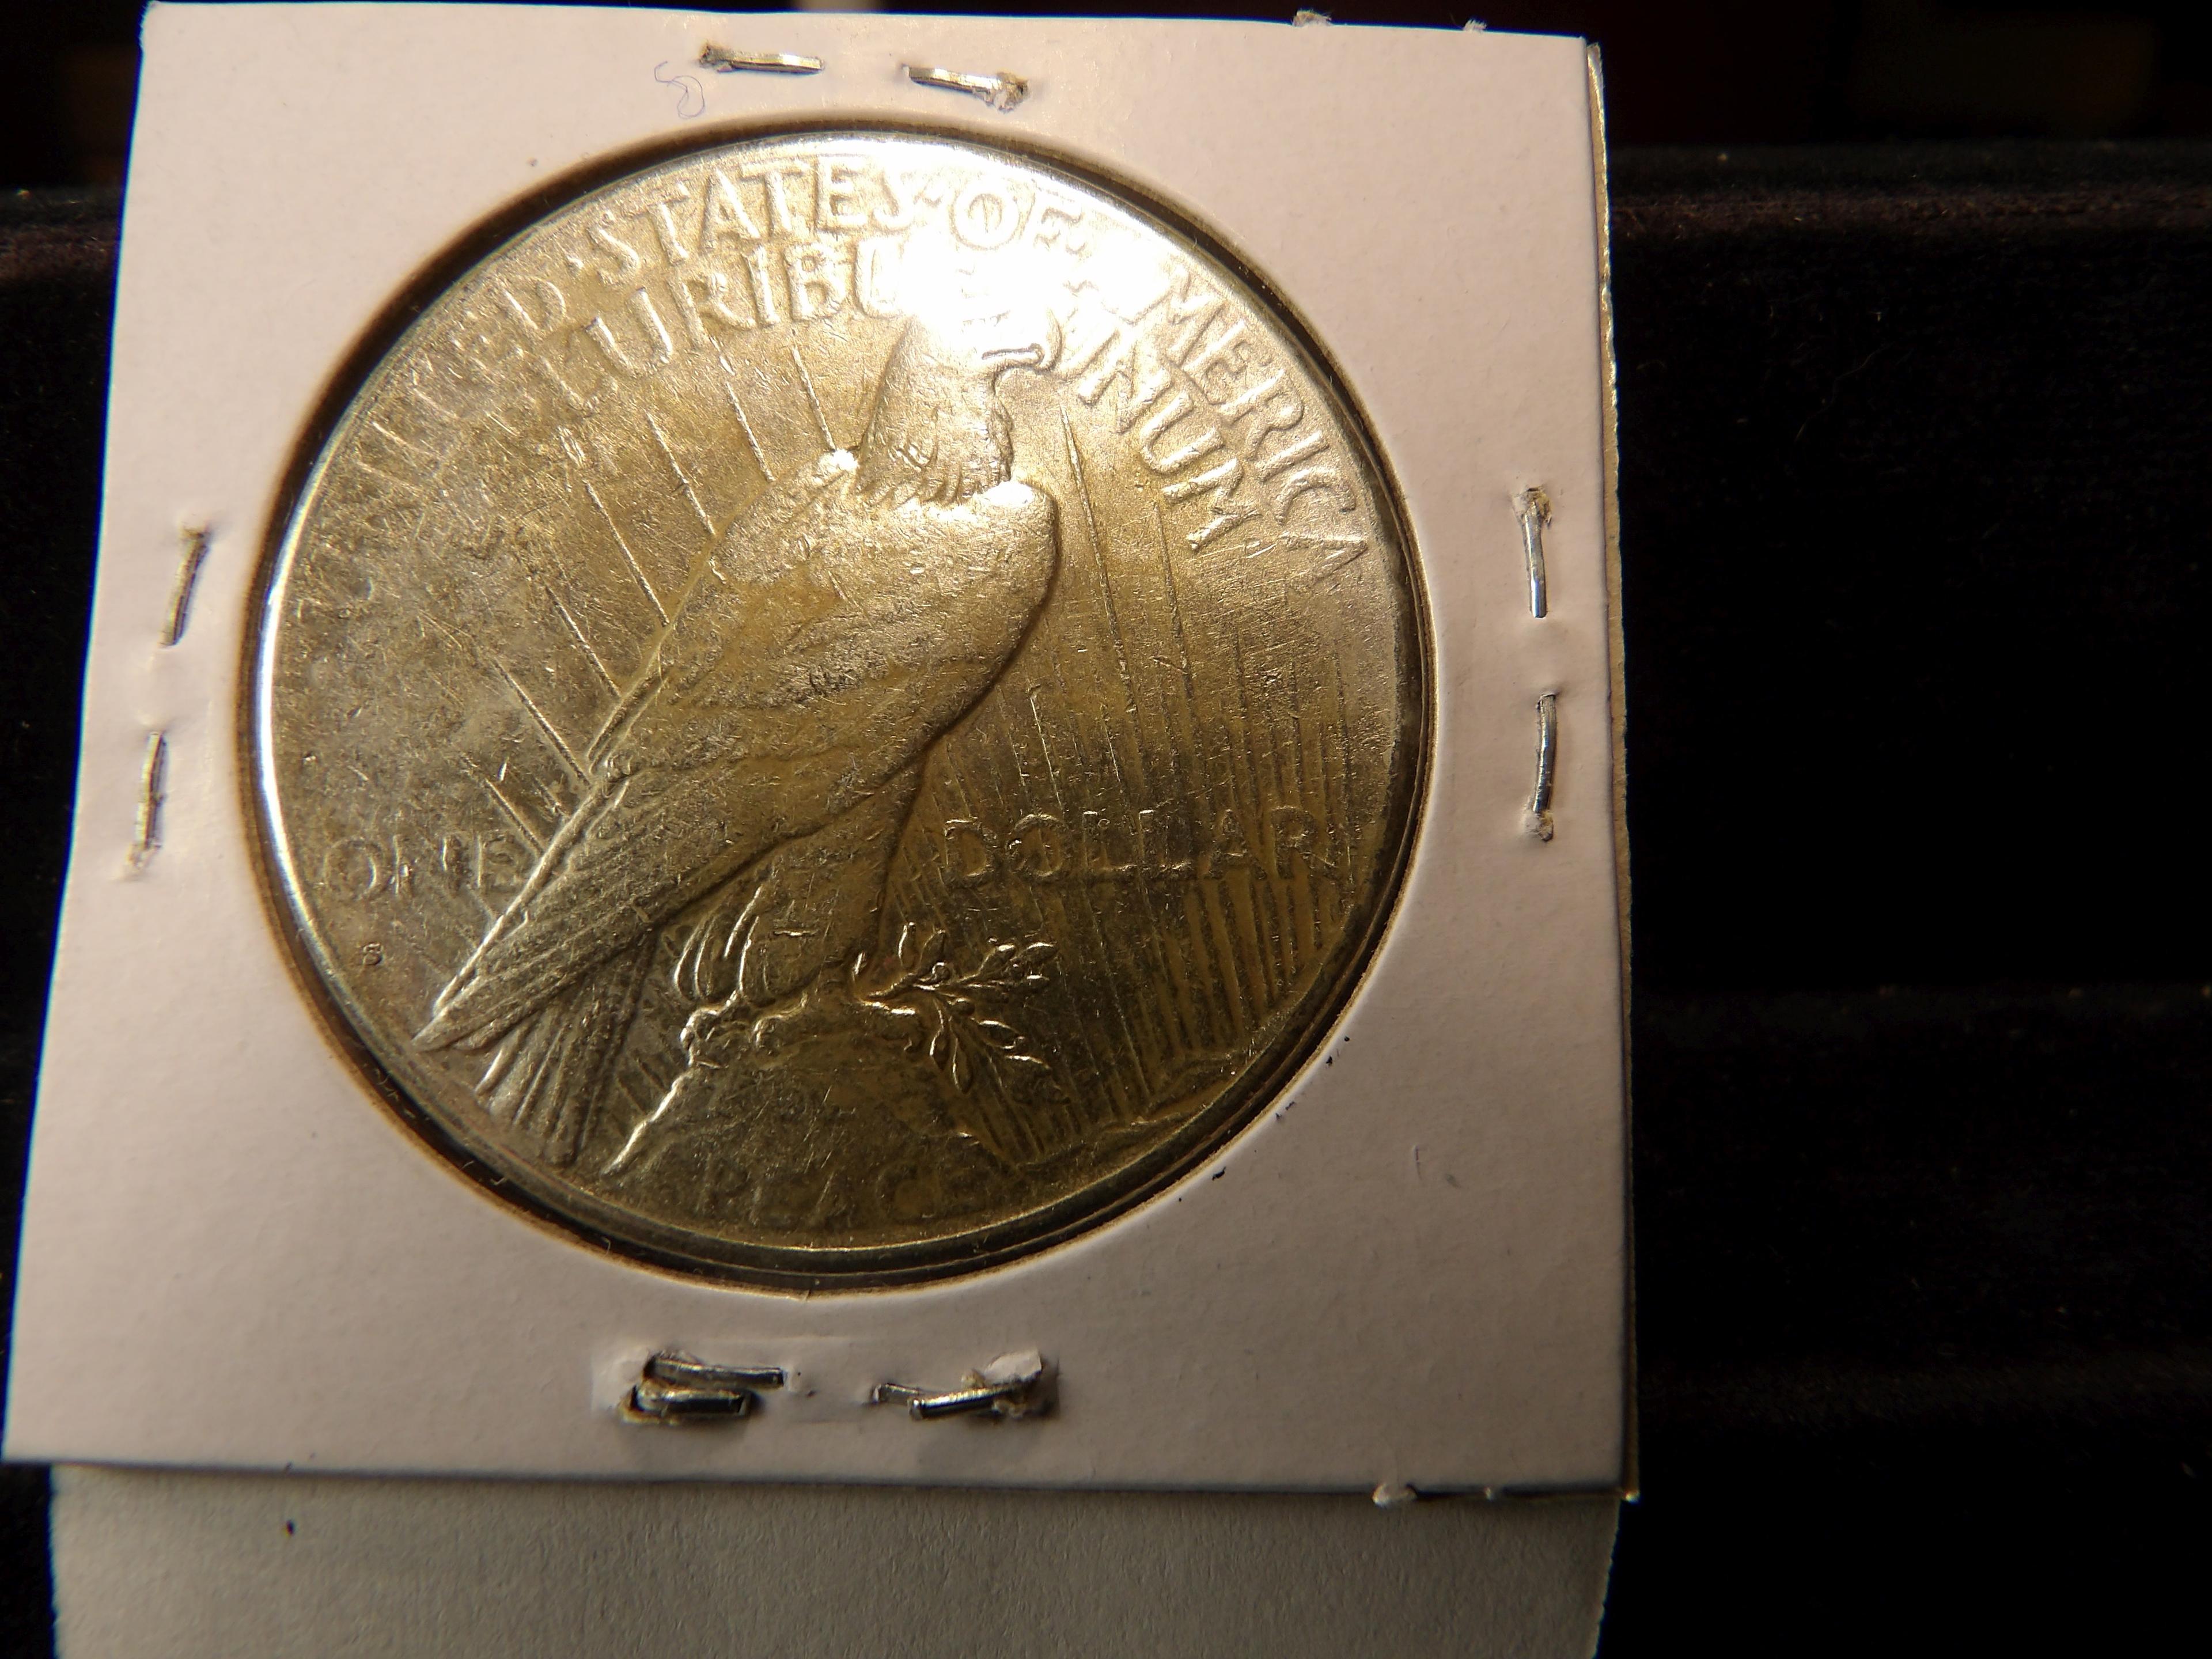 1928 S U.S. Peace Silver Dollar, EF.